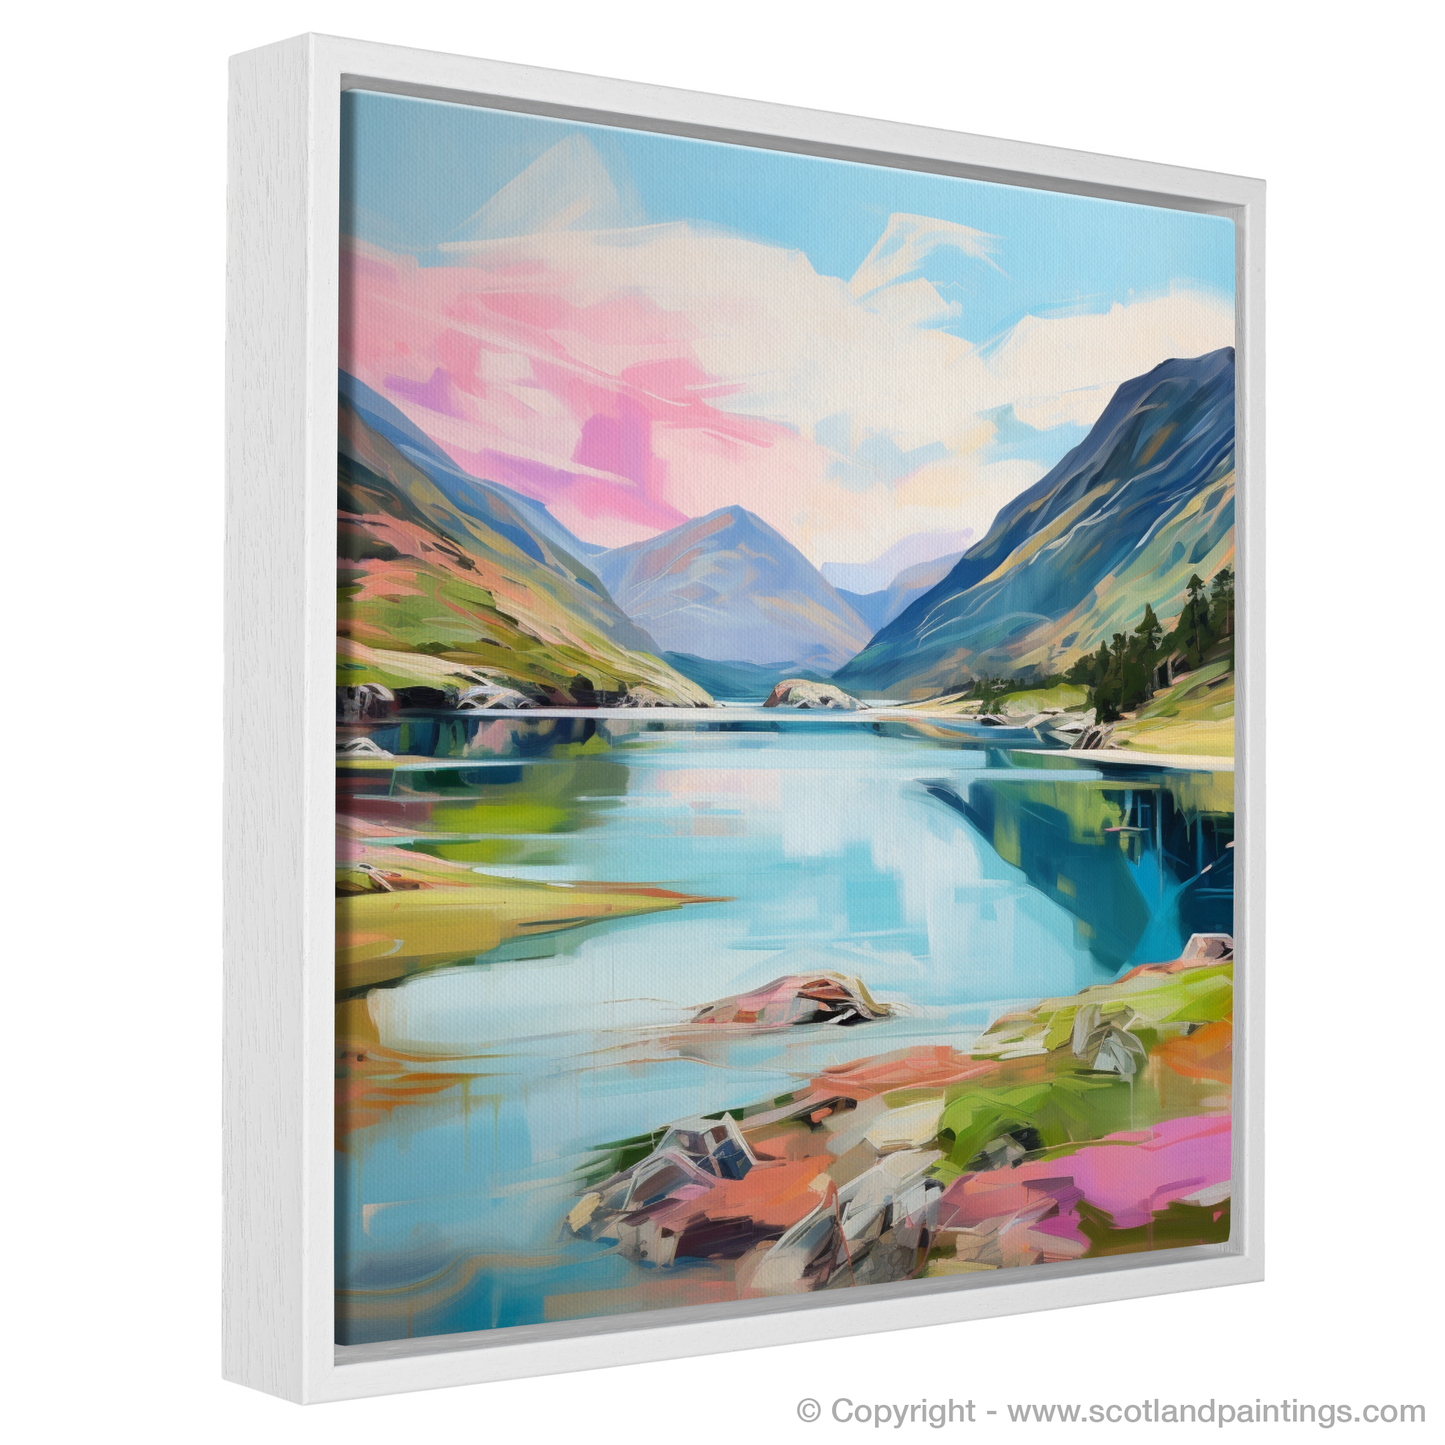 Painting and Art Print of Loch Shiel, Highlands in summer entitled "Summer Serenity at Loch Shiel: A Modern Highland Masterpiece".